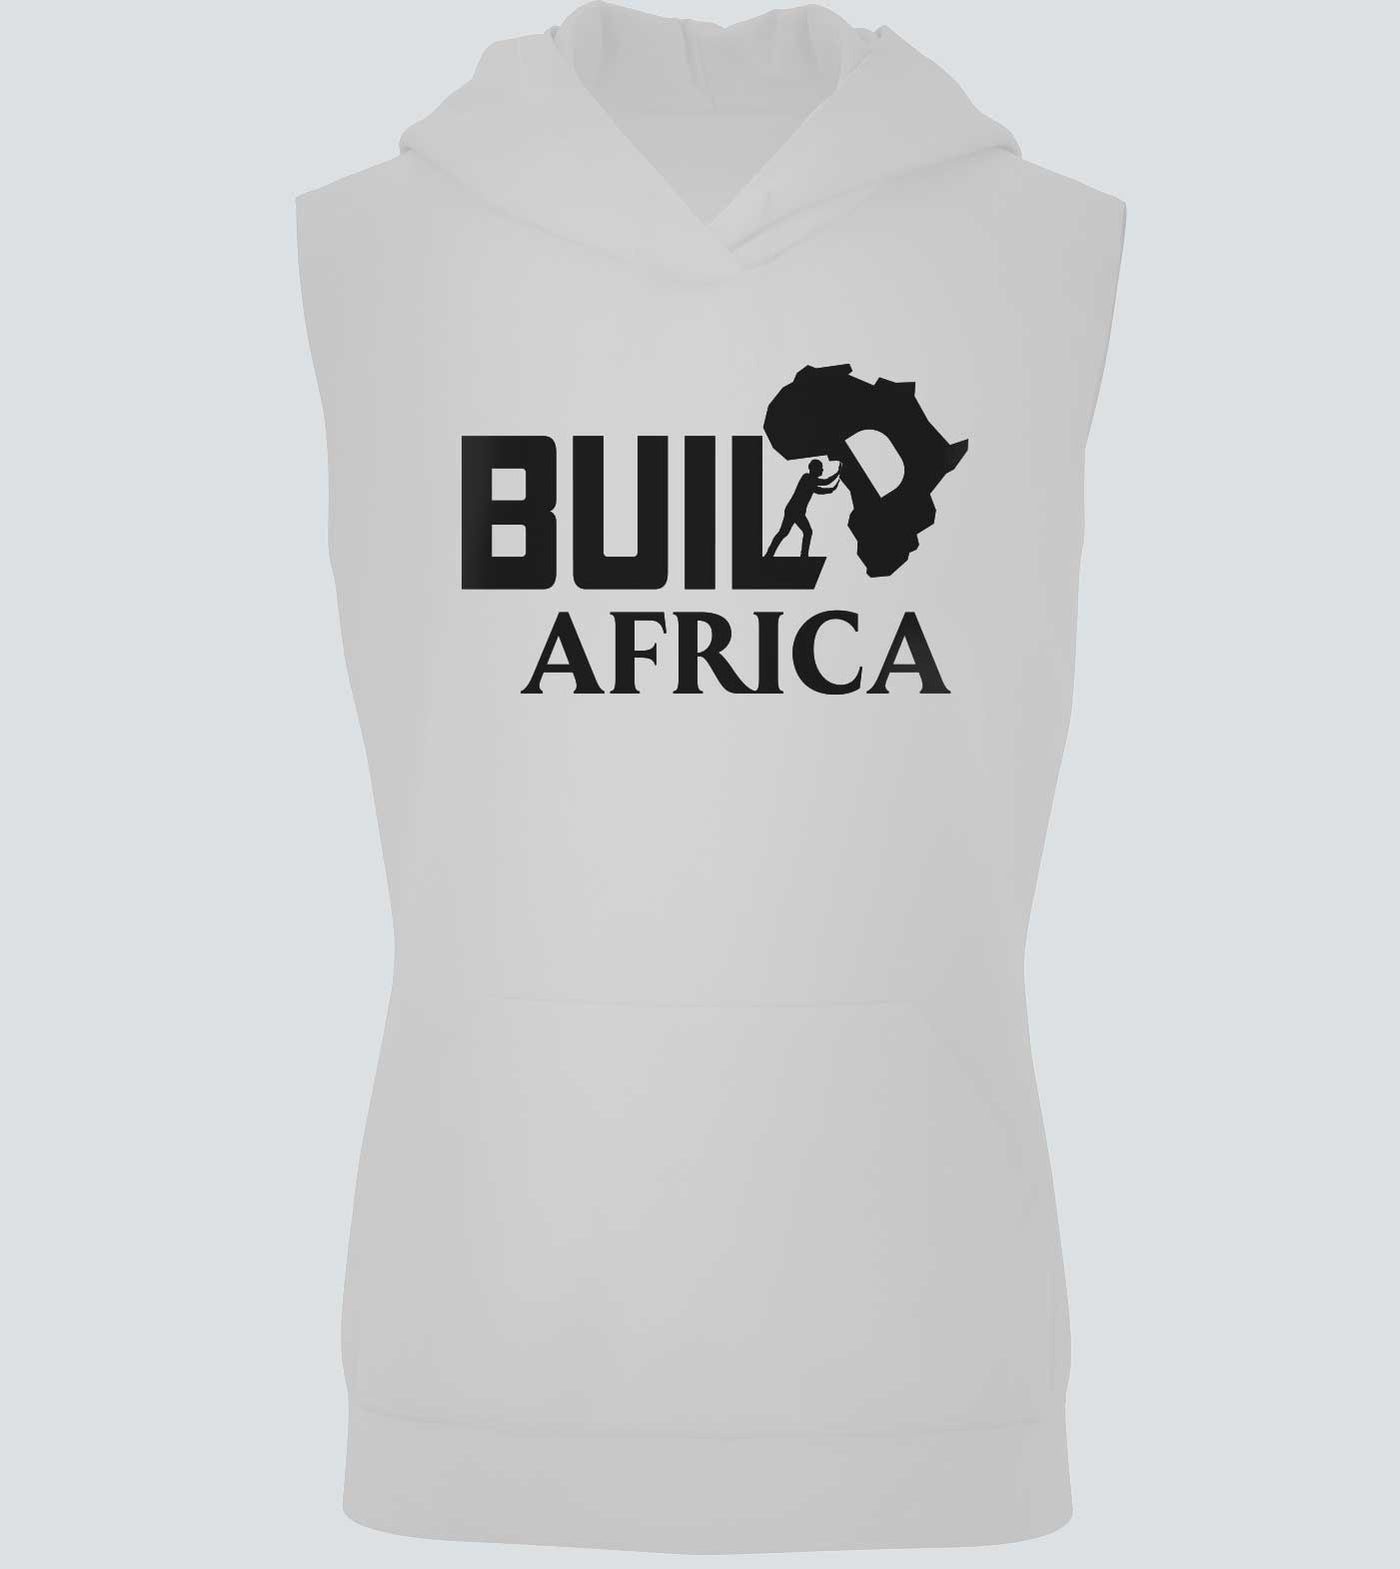 Build Africa 2 Sleeveless Hoodies